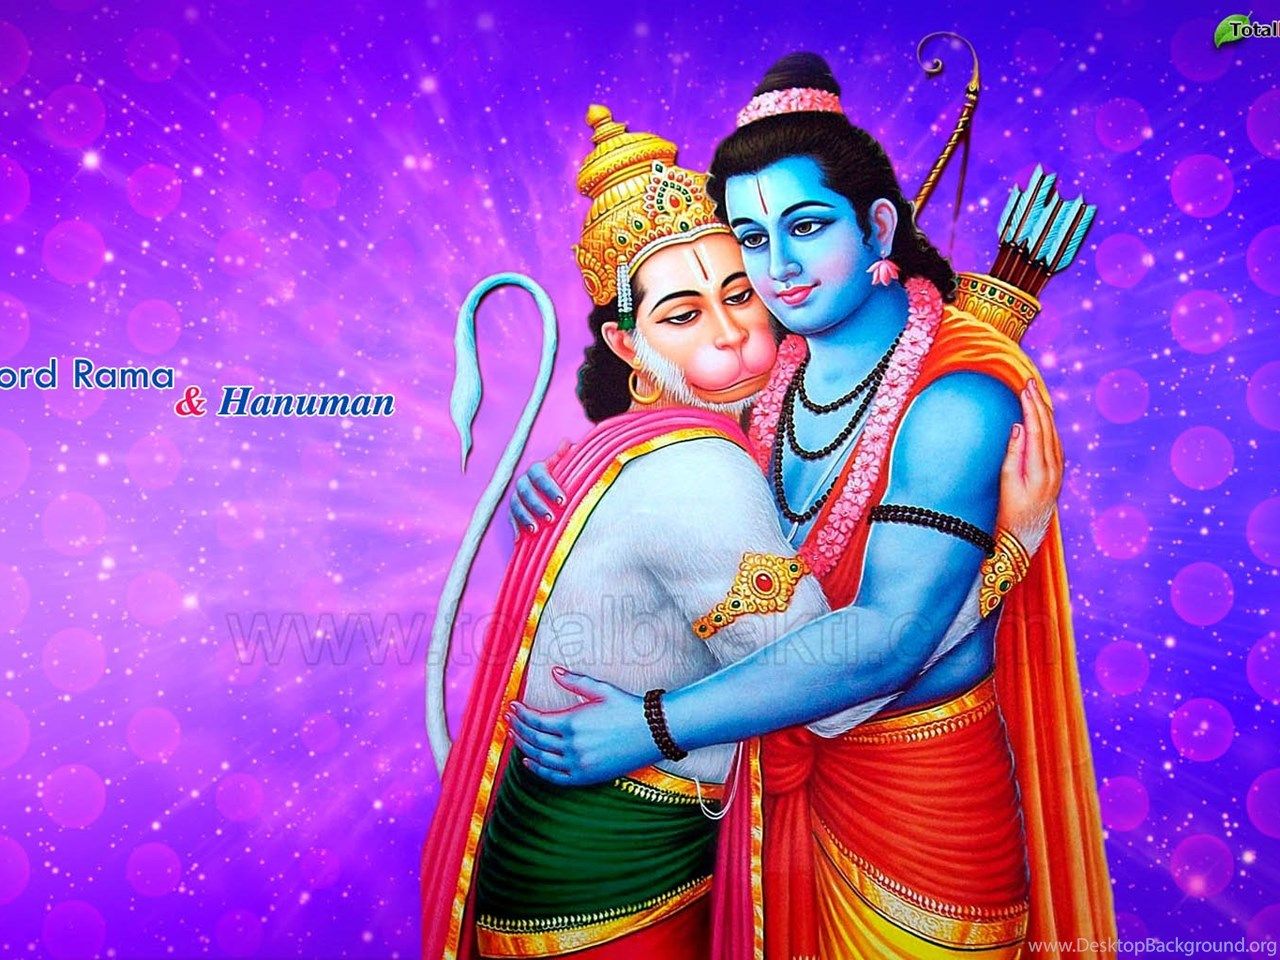 Hanuman Wallpaper, Hindu Wallpaper, Lord Ram & Hanuman Wallpaper. Desktop Background